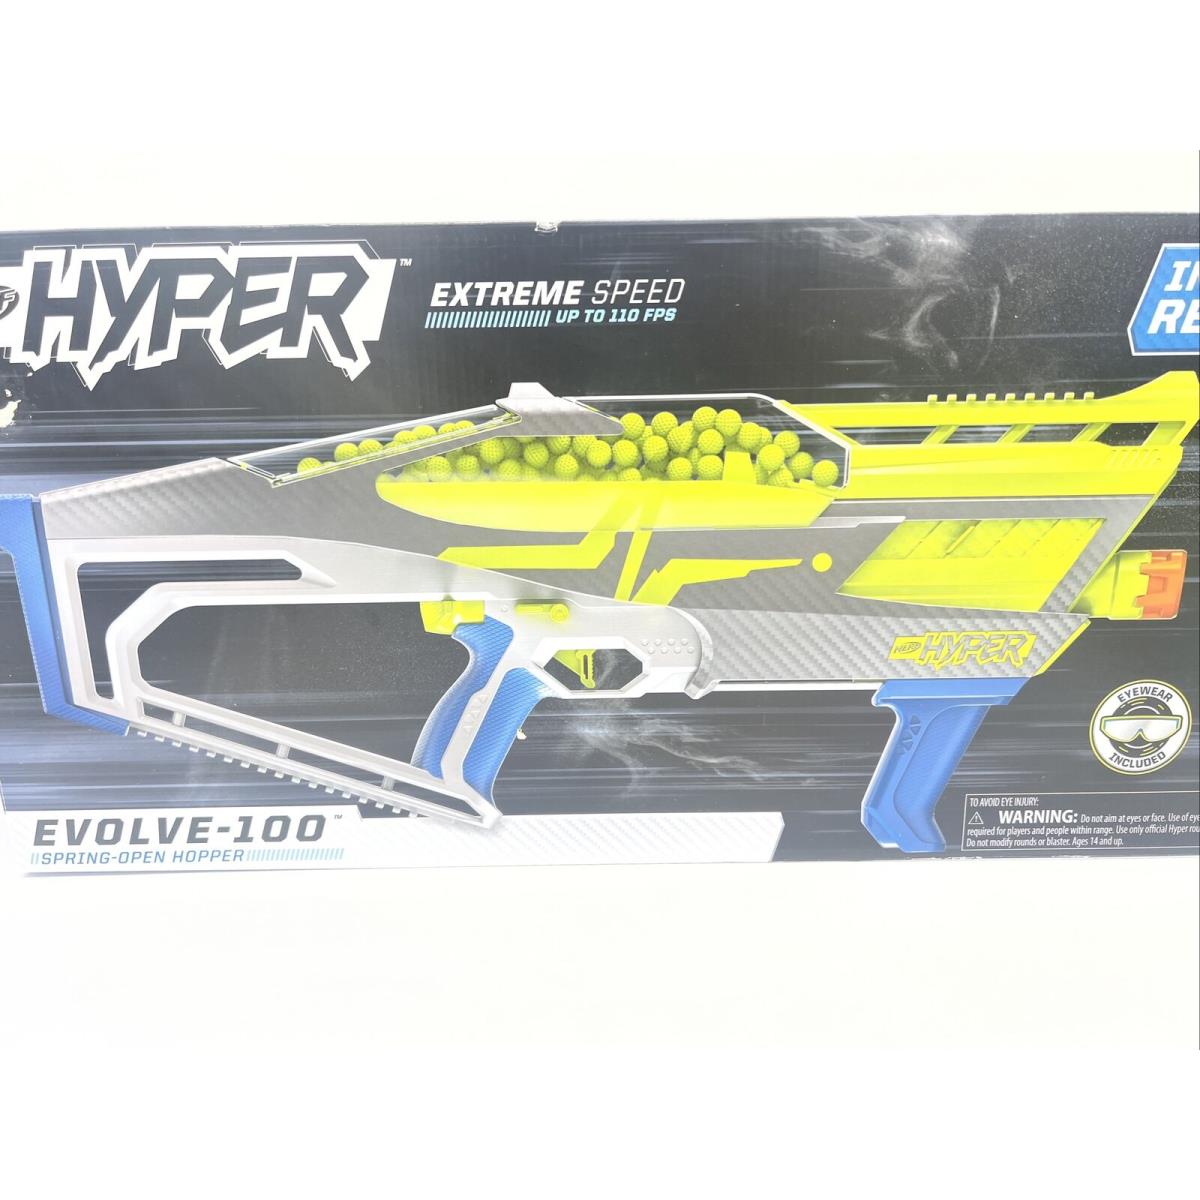 Nerf Hyper Evolve-100 Open Hopper 70 Rounds Extreme Speed Instant Reload